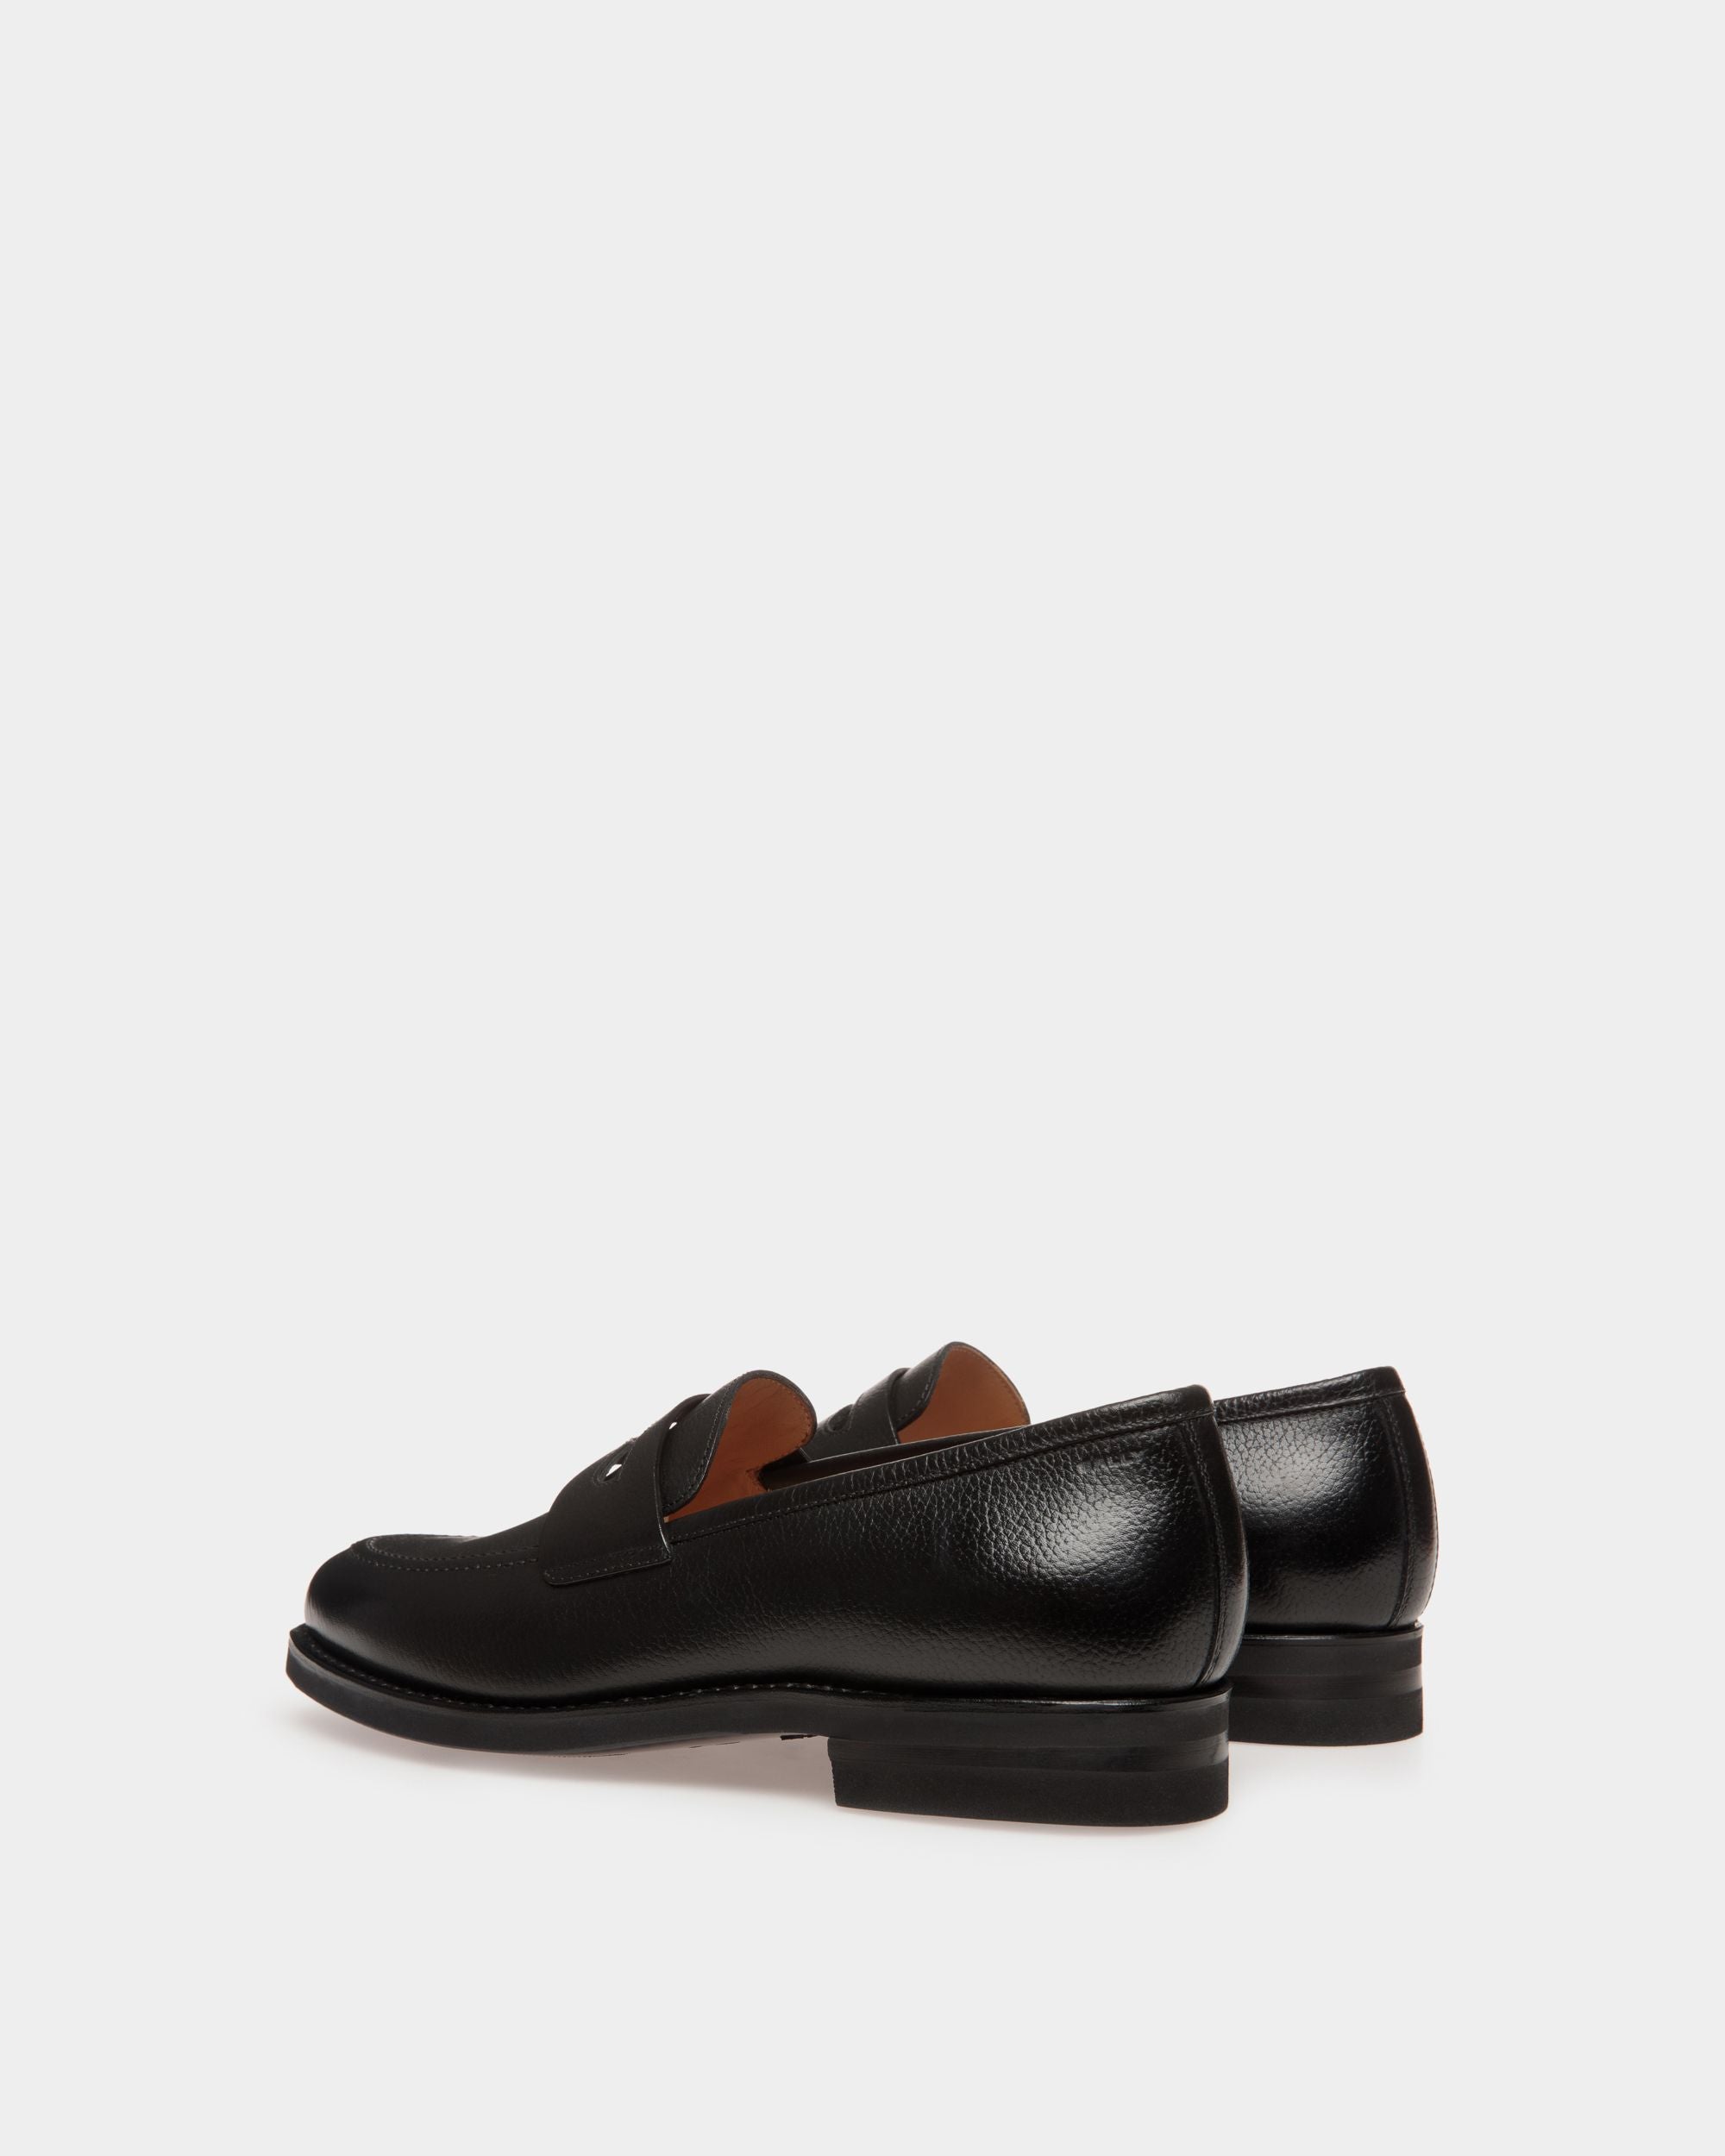 Schoenen | Men's Loafer in Black Embossed Leather | Bally | Still Life 3/4 Back